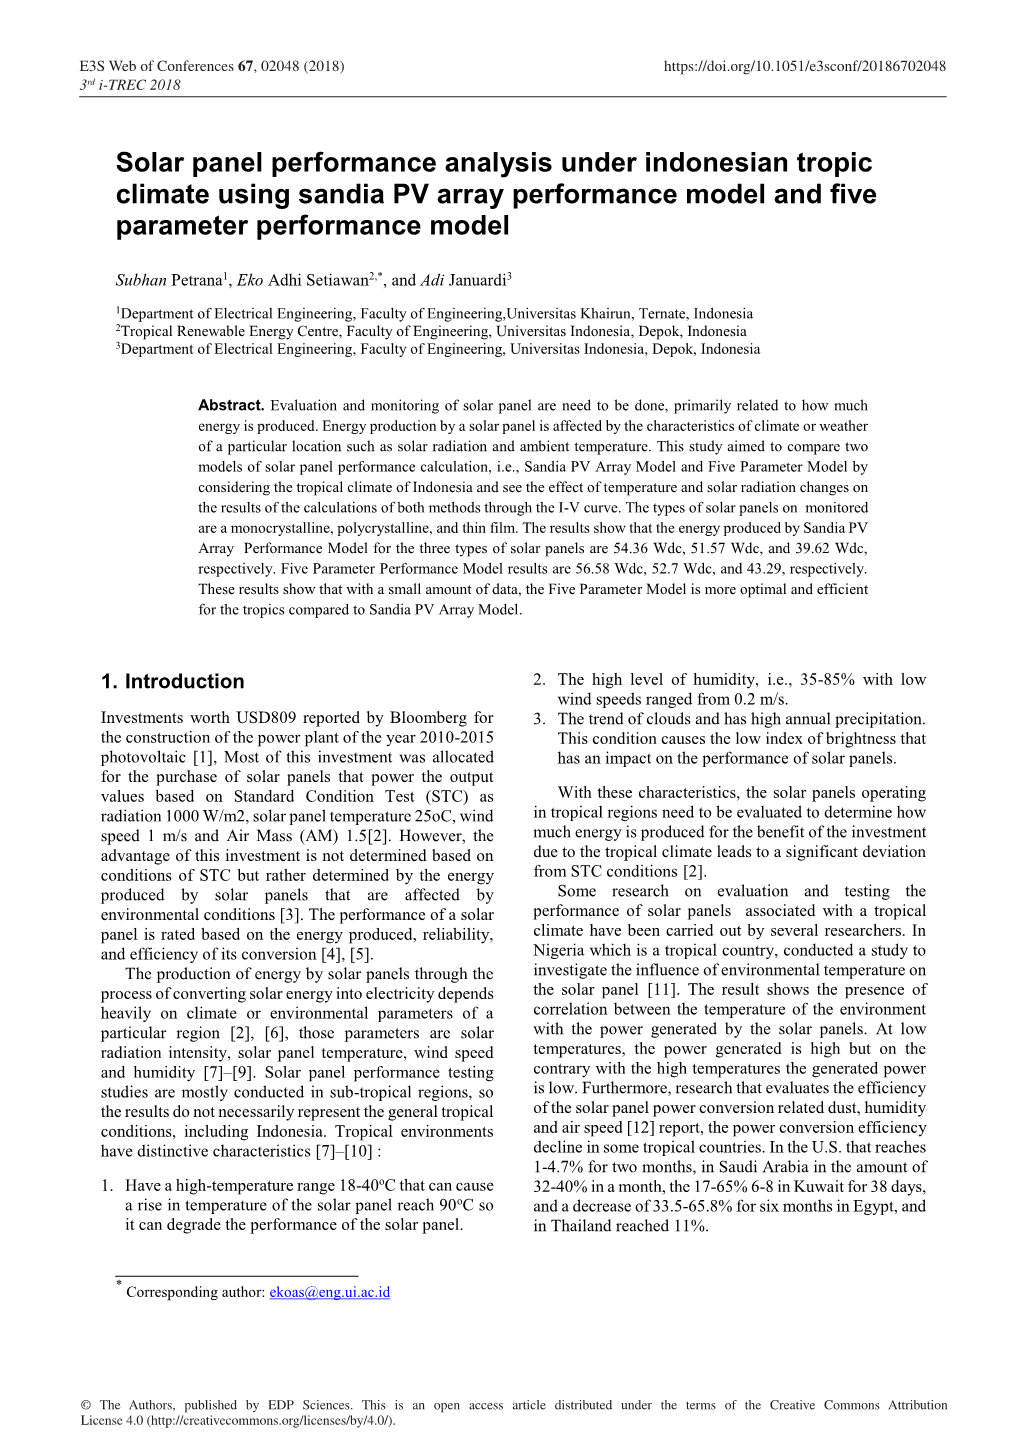 Solar Panel Performance Analysis Under Indonesian Tropic Climate Using Sandia PV Array Performance Model and Five Parameter Performance Model